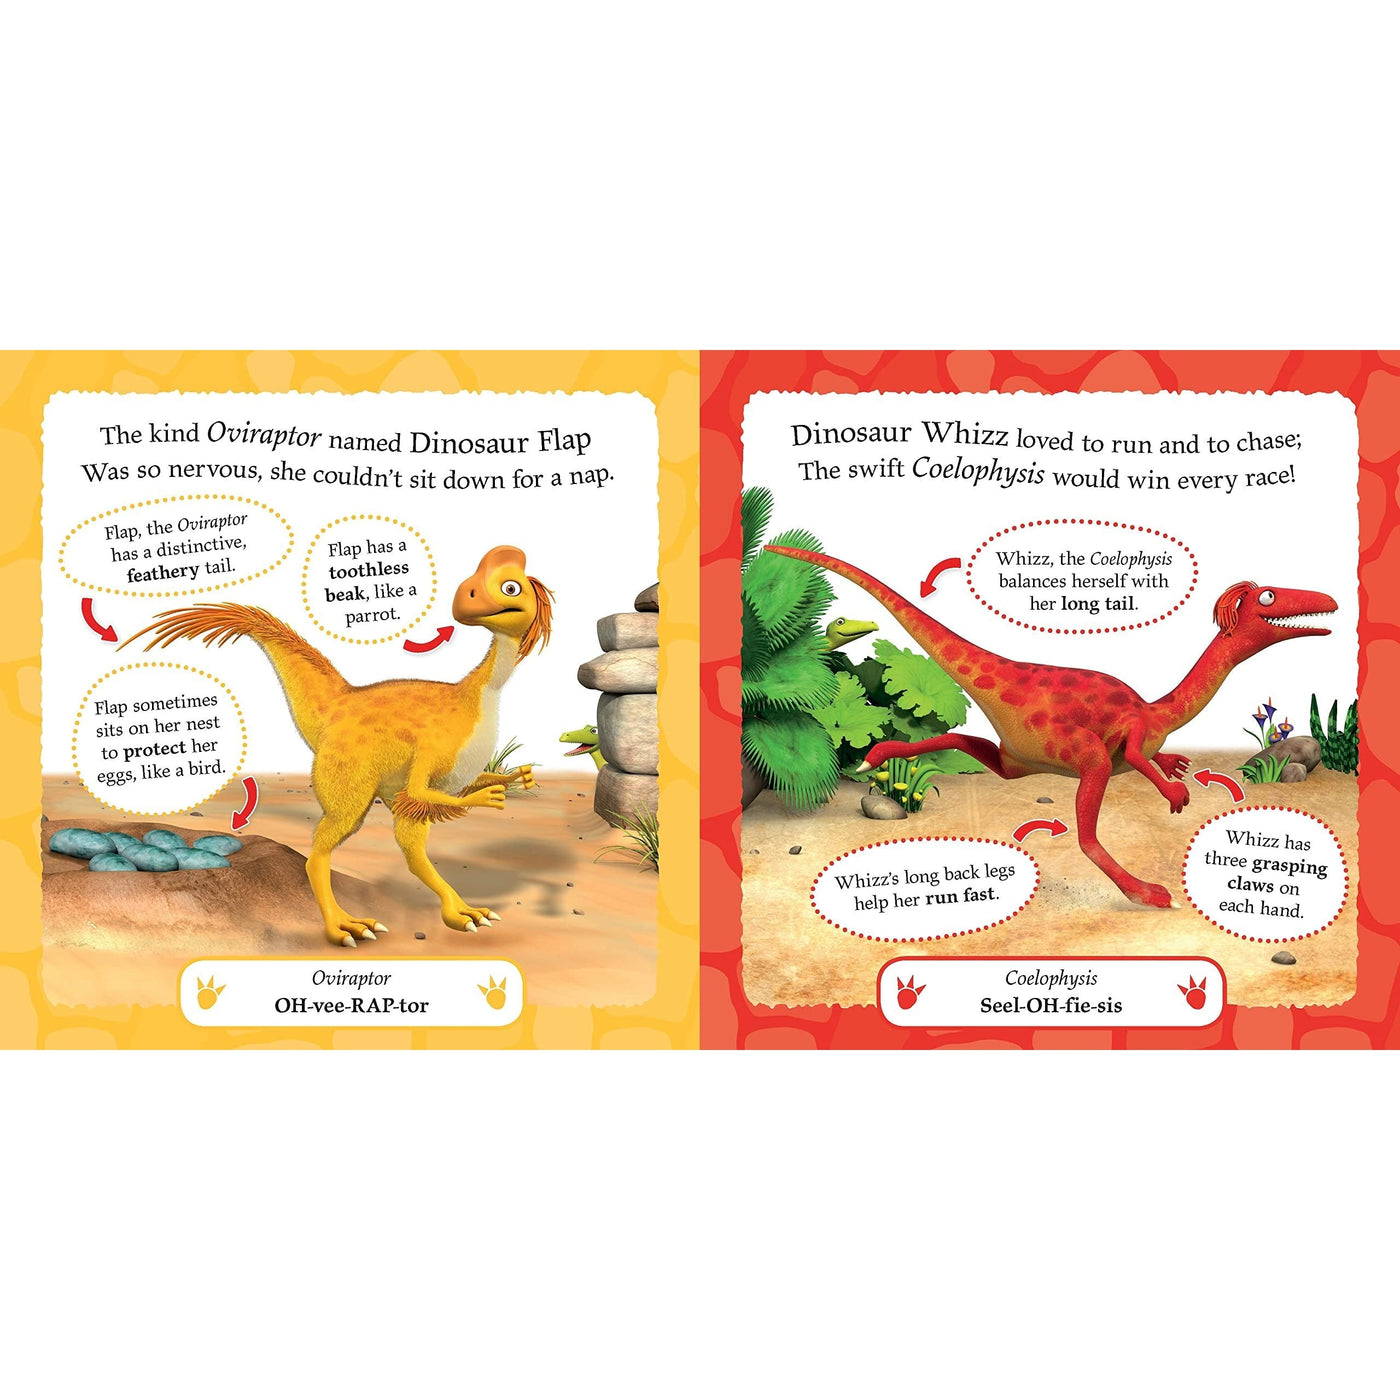 Dinosaur Roar And Friends! : World Book Day 2022 - Peter Curtis